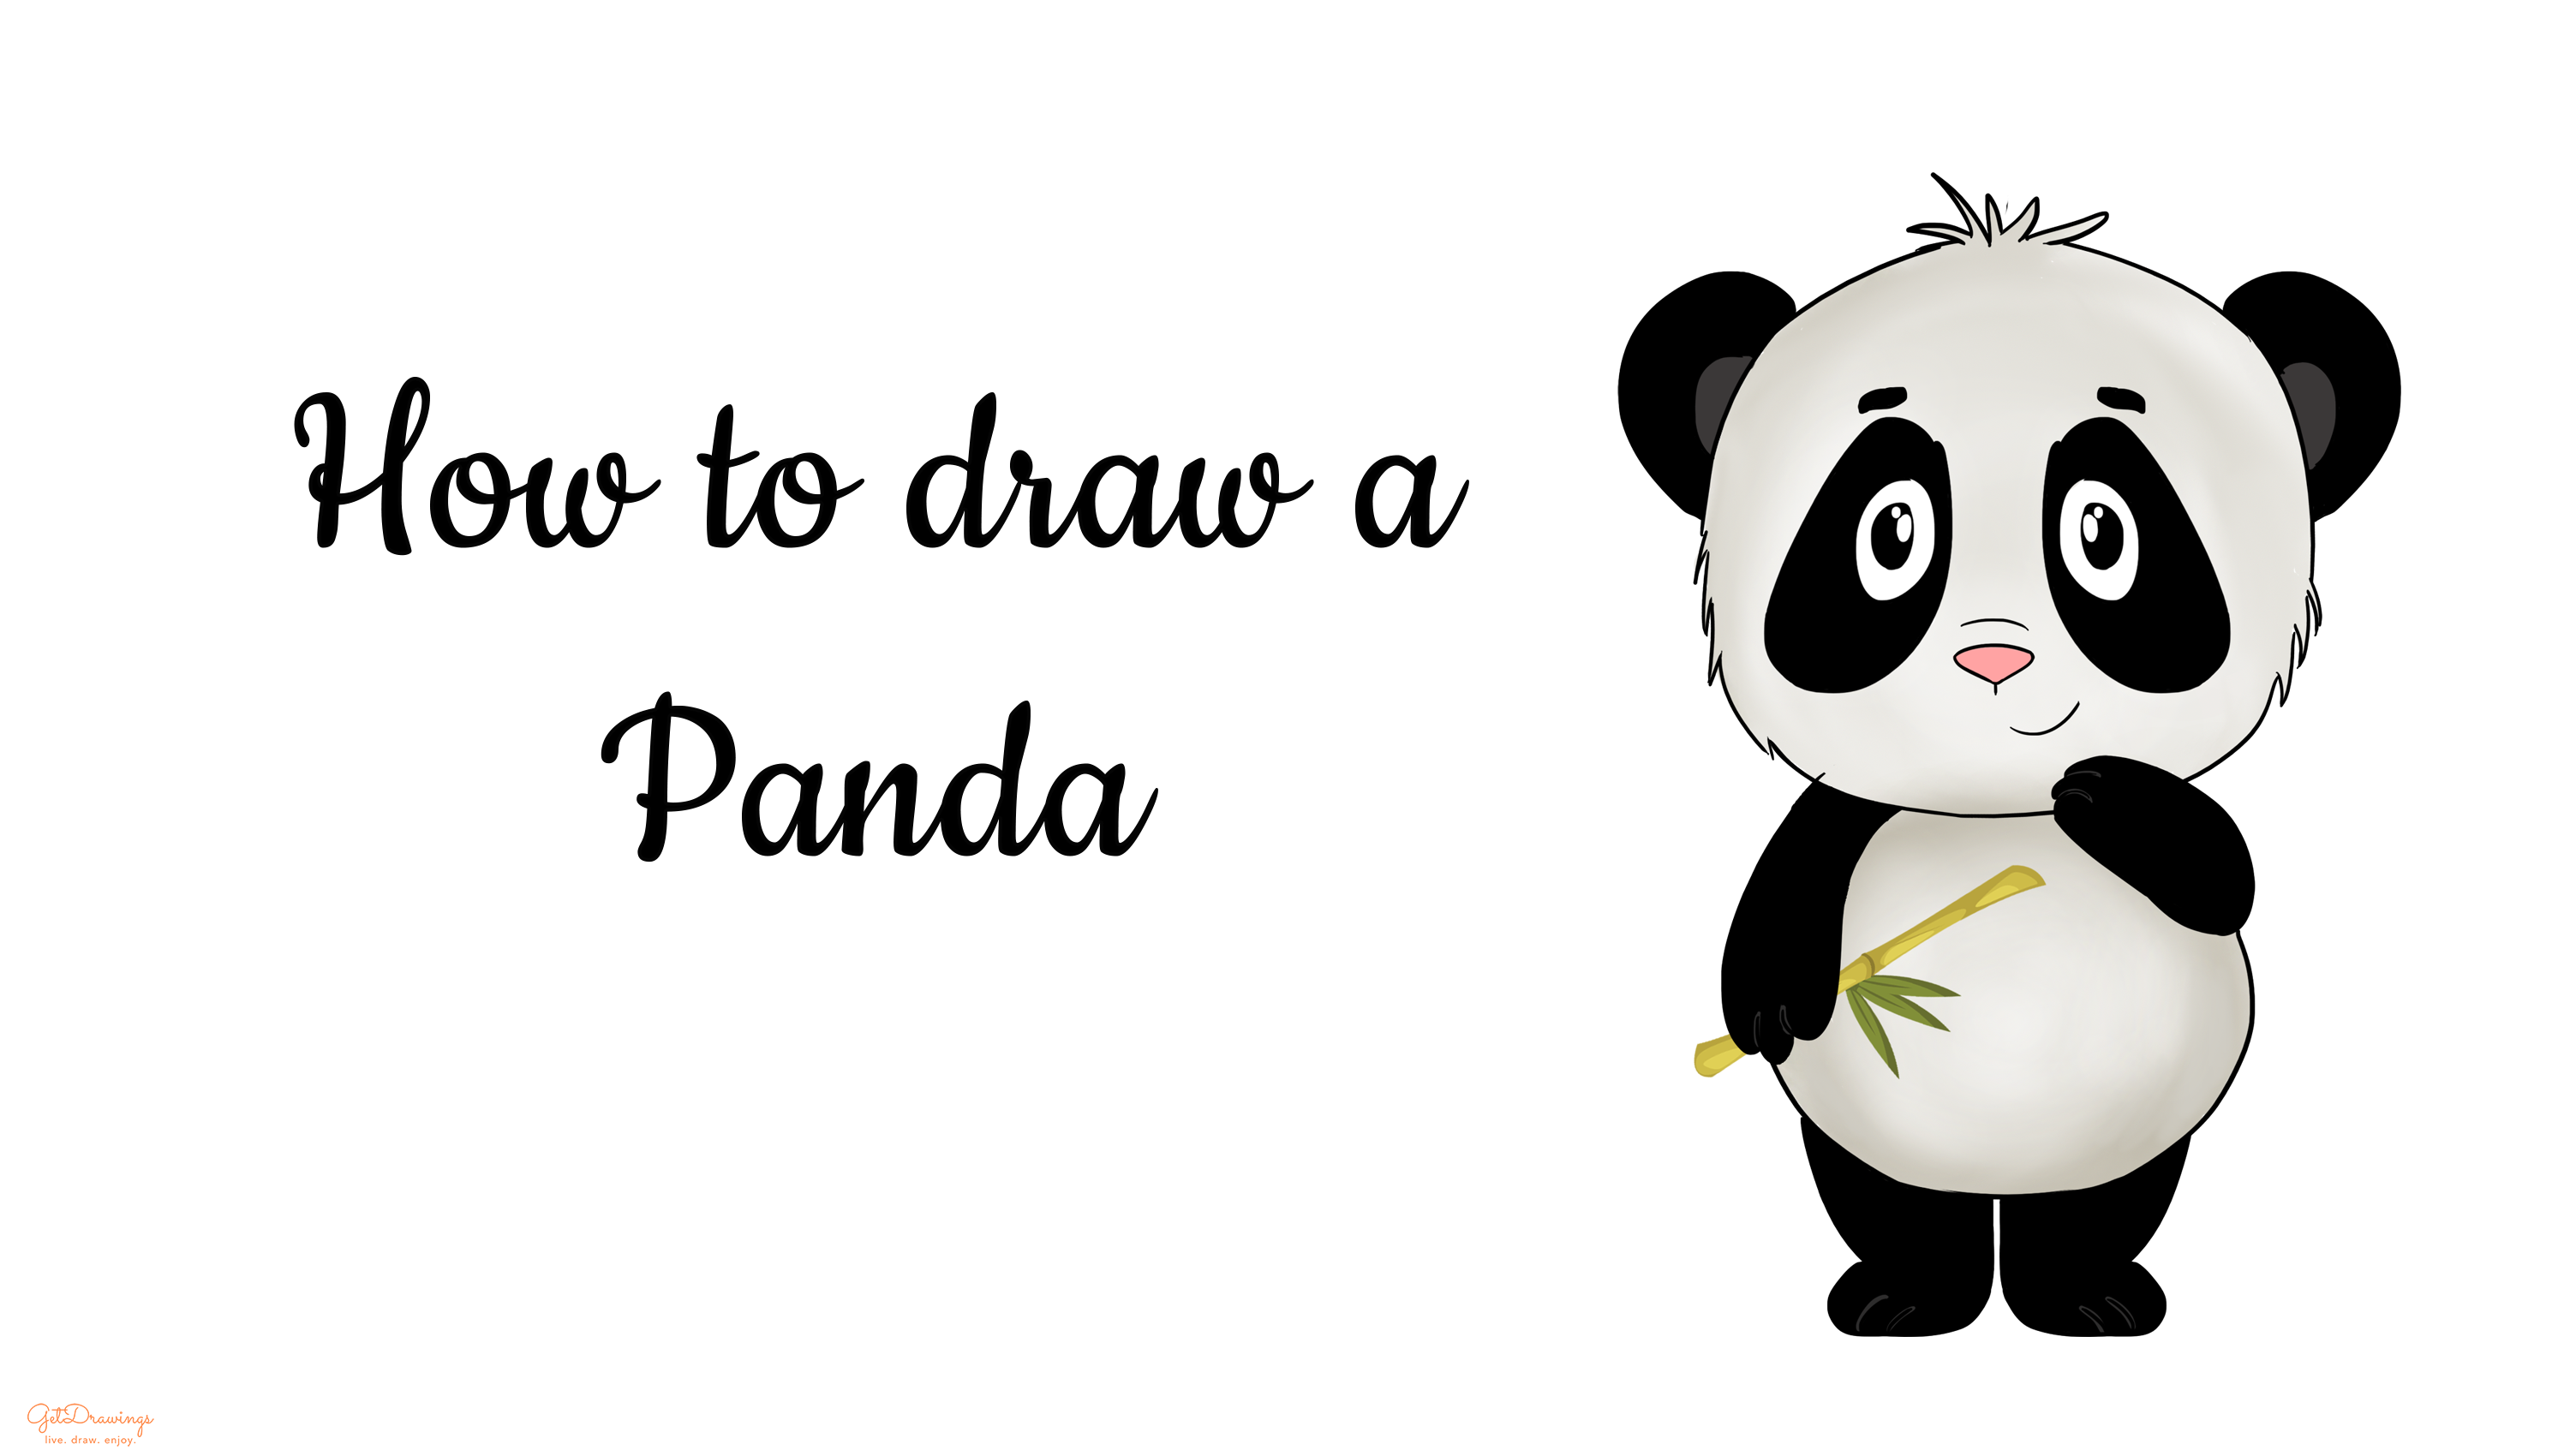 How to draw a cute Panda?